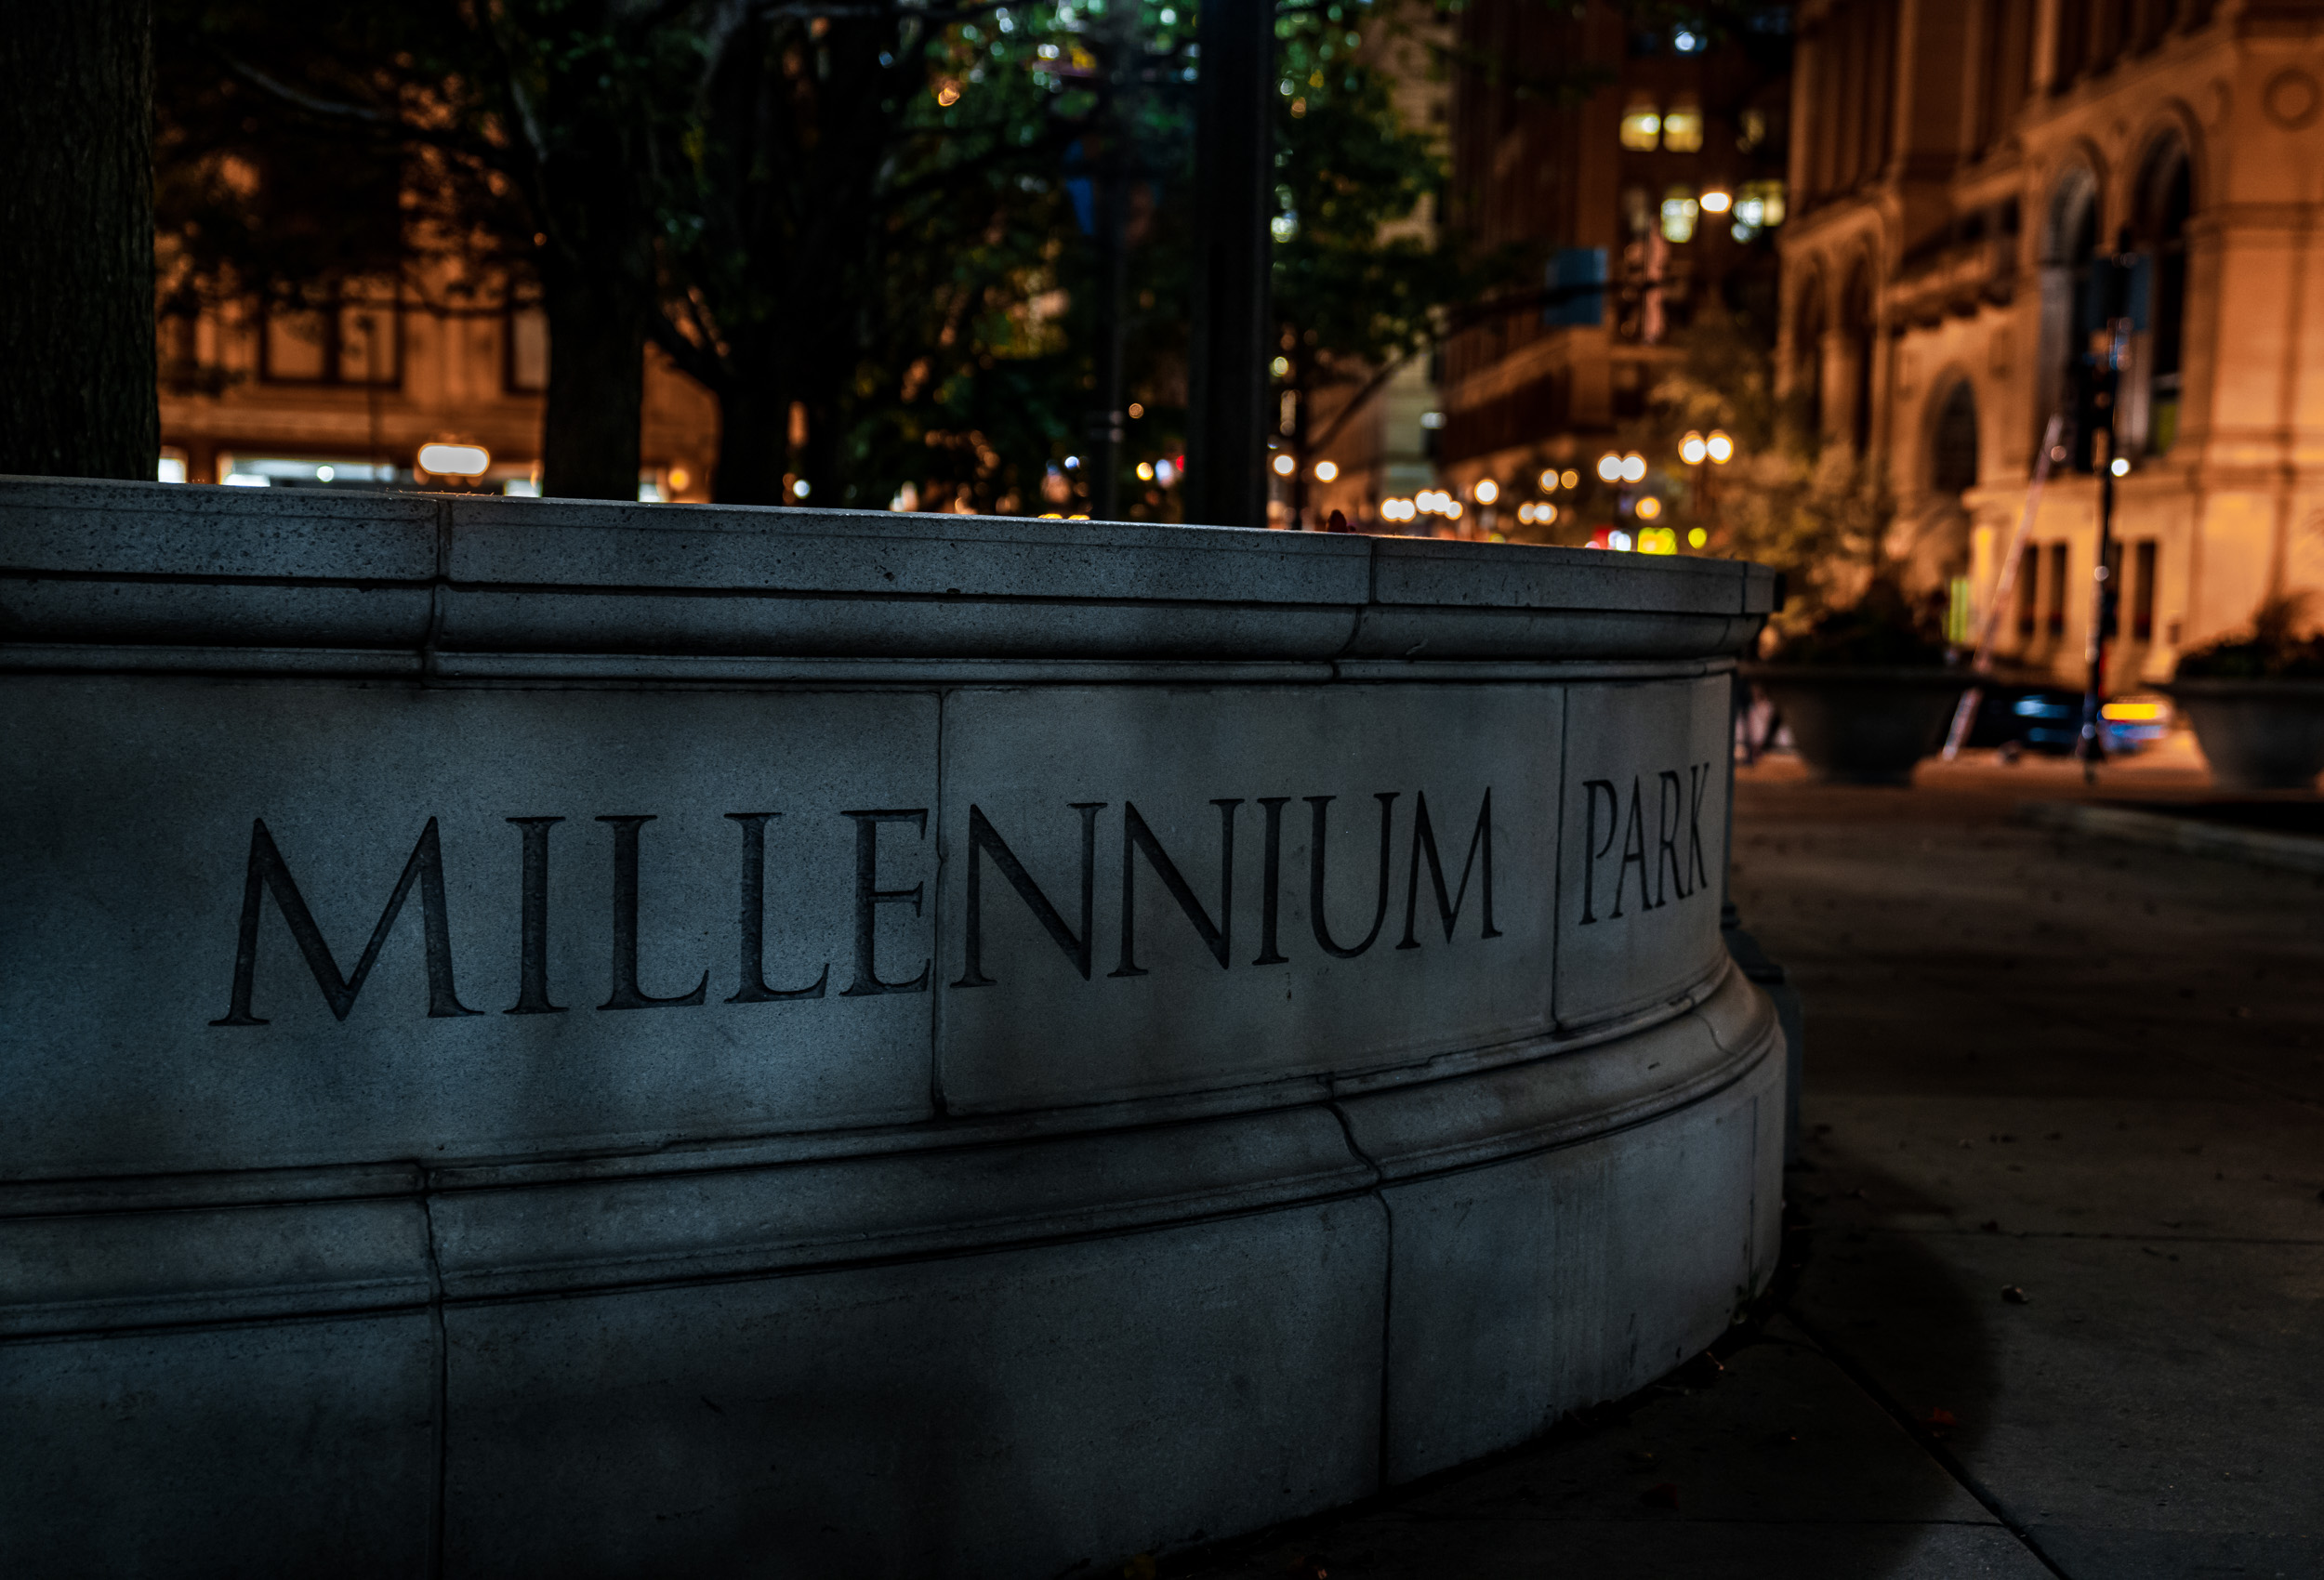 Millennim park night website 2.JPG